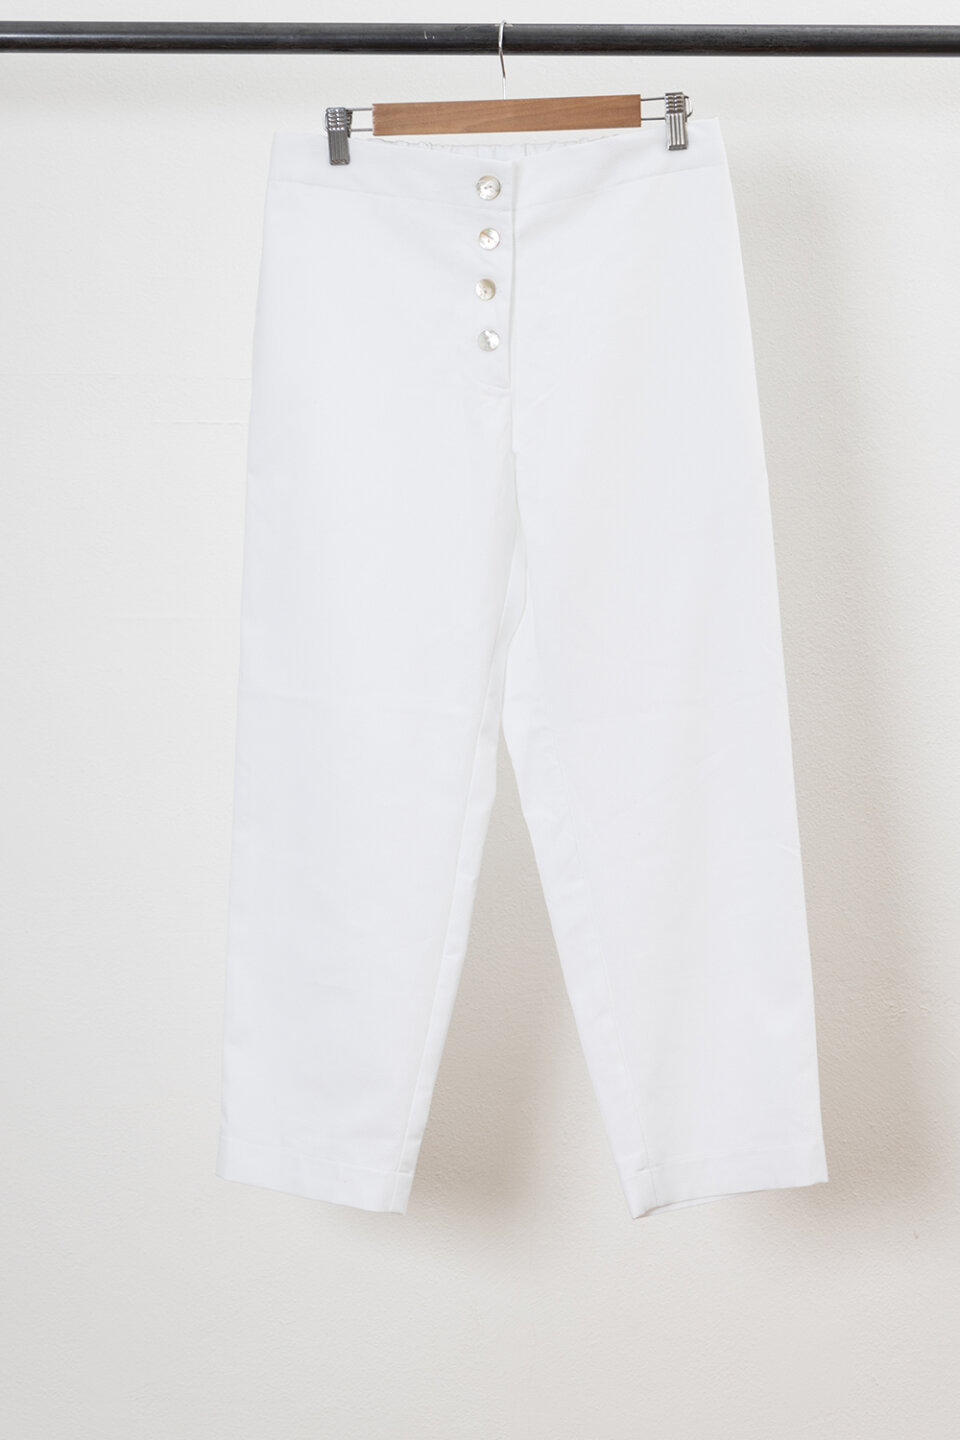 Pantalone Boy bianco 1 1 - Officinae